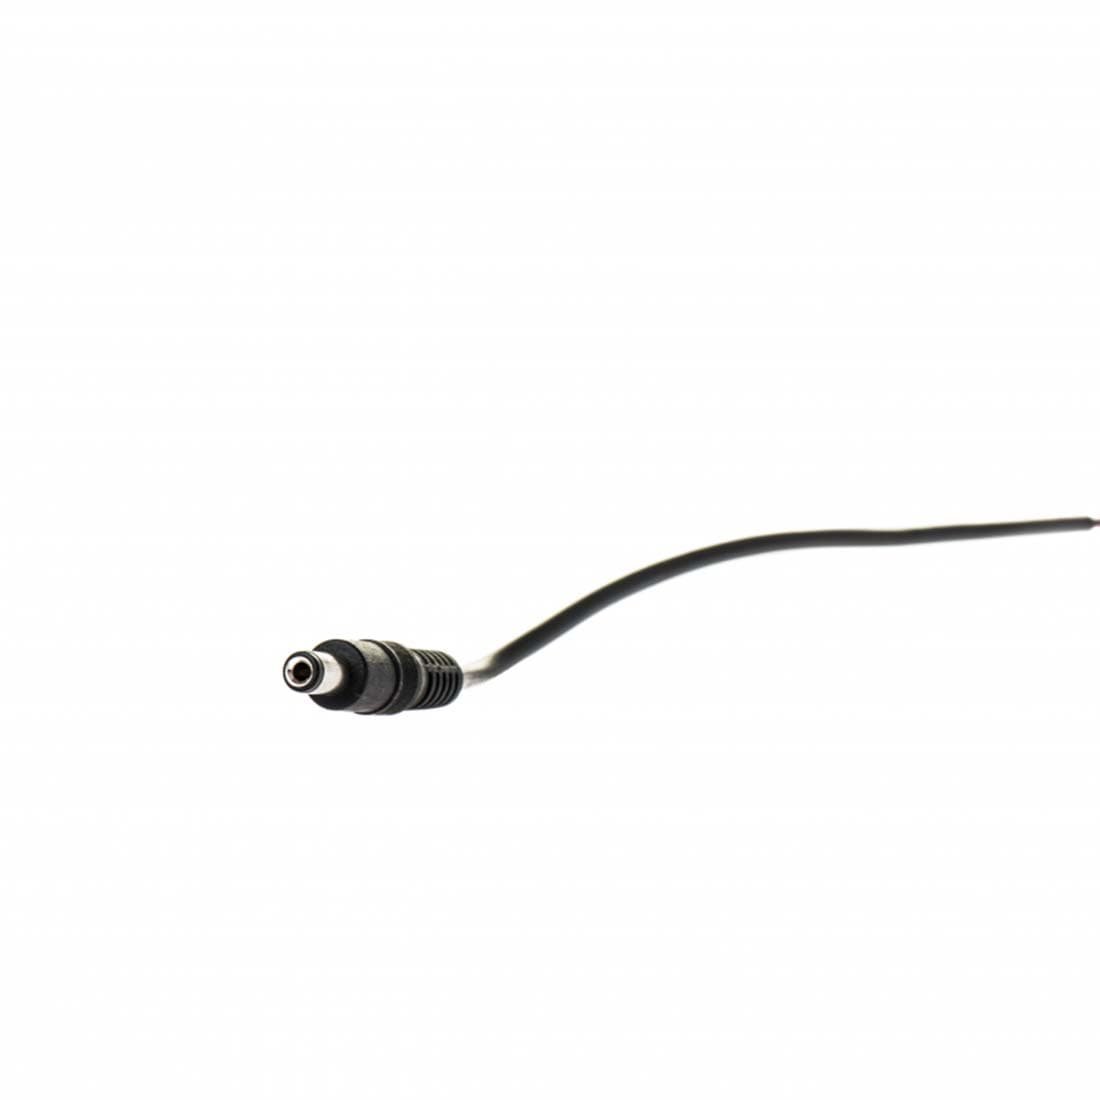 LED Strip Connector - Han stik - Sort stik - Single Color - 10 cm